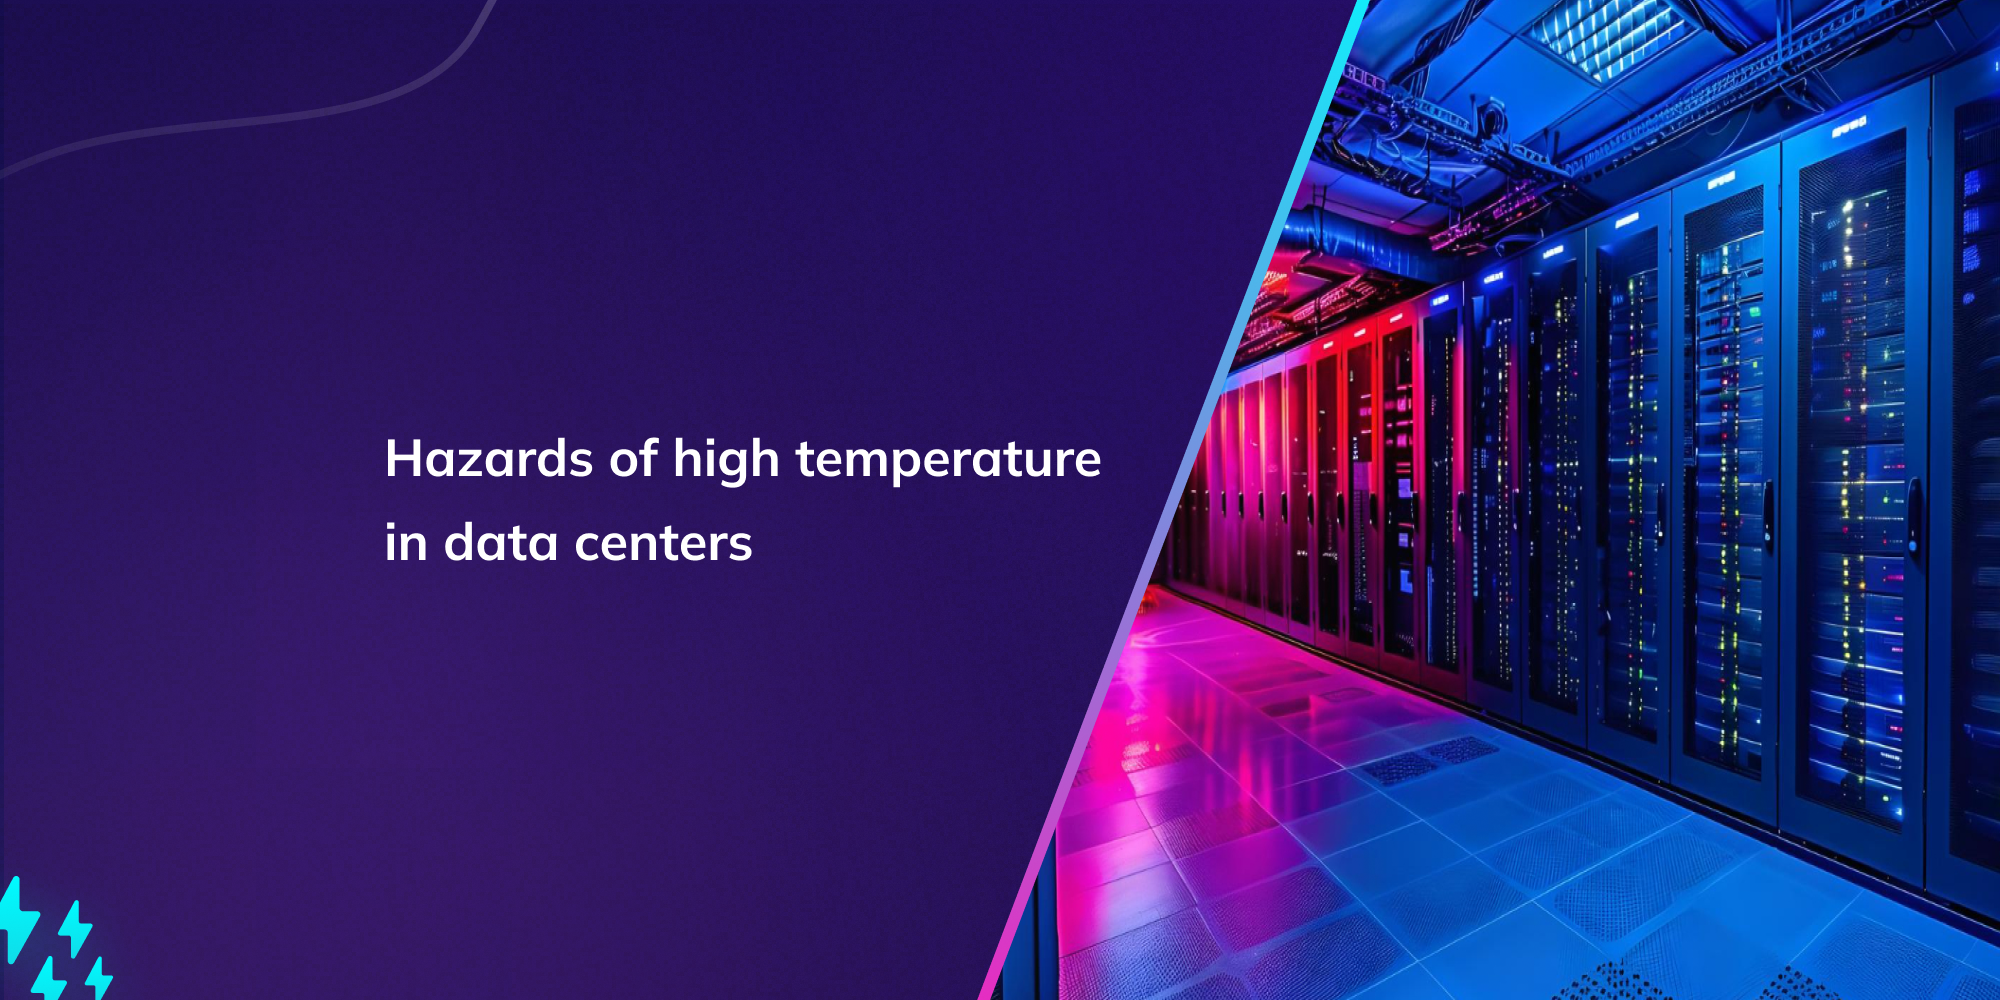 Hazards of high temperature in data centers